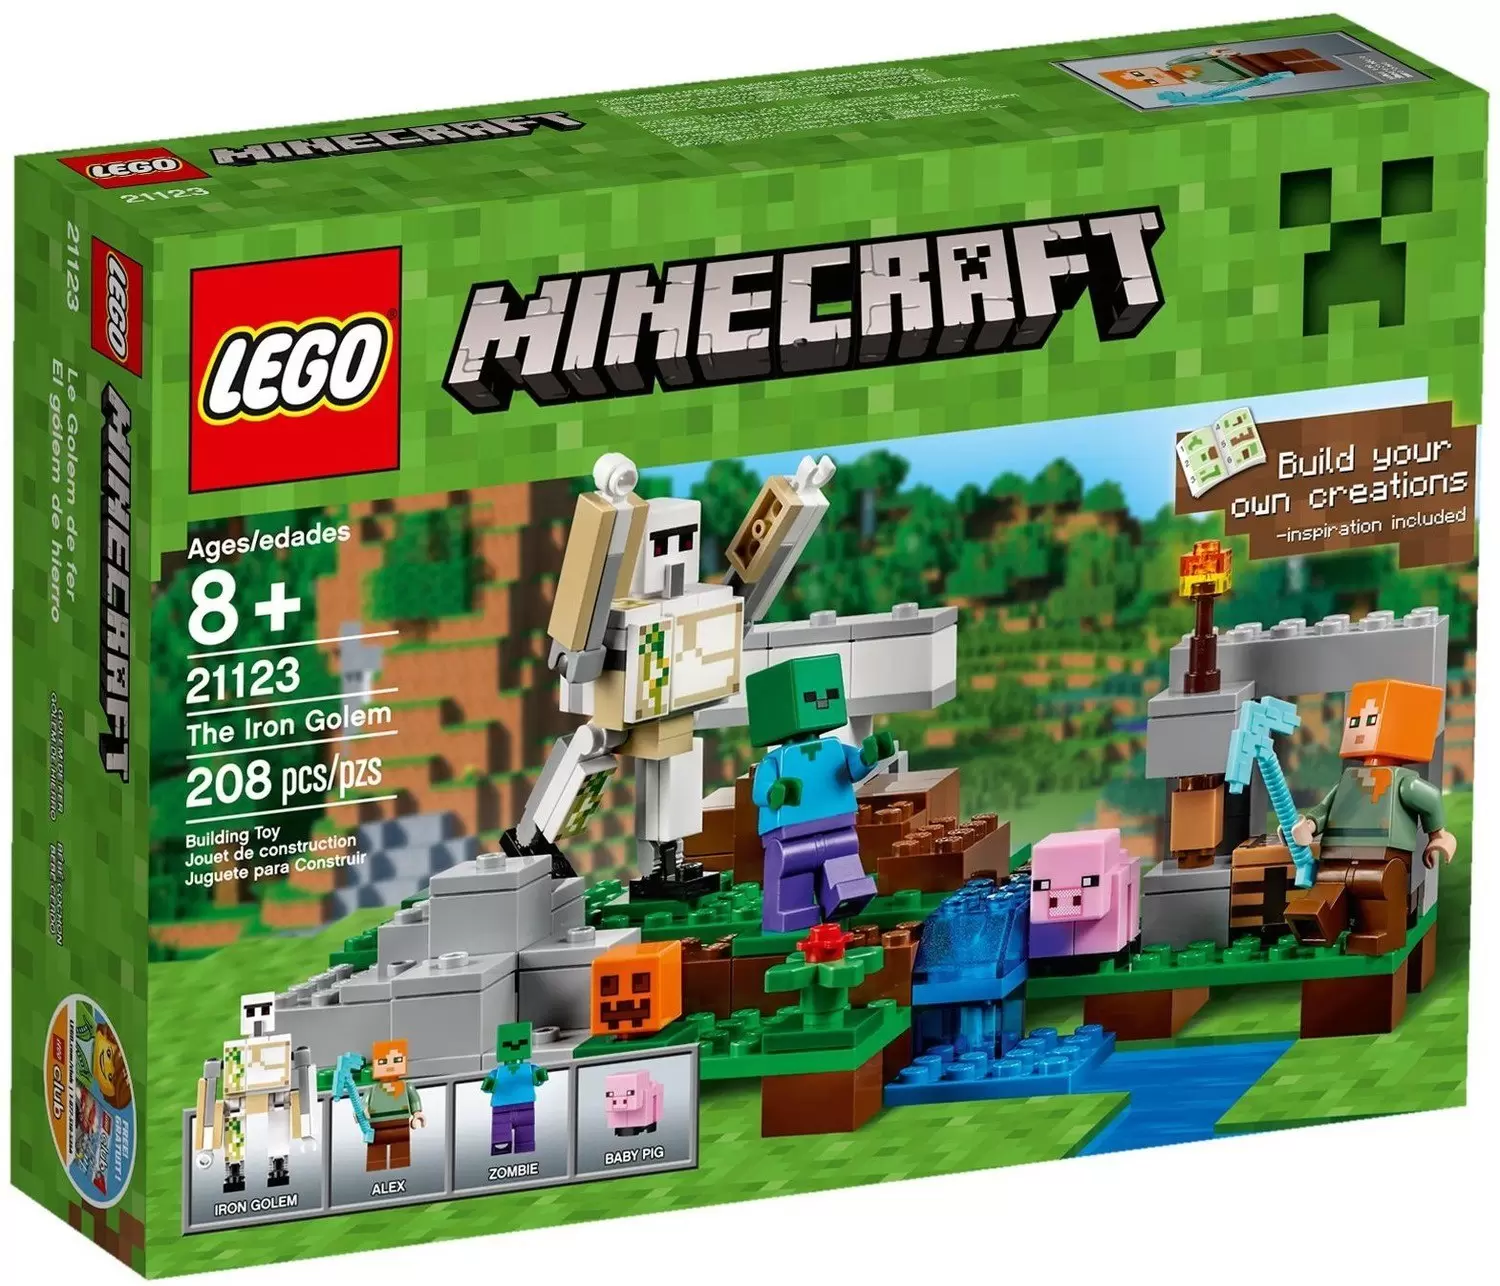  Lego Minecraft + Jouet